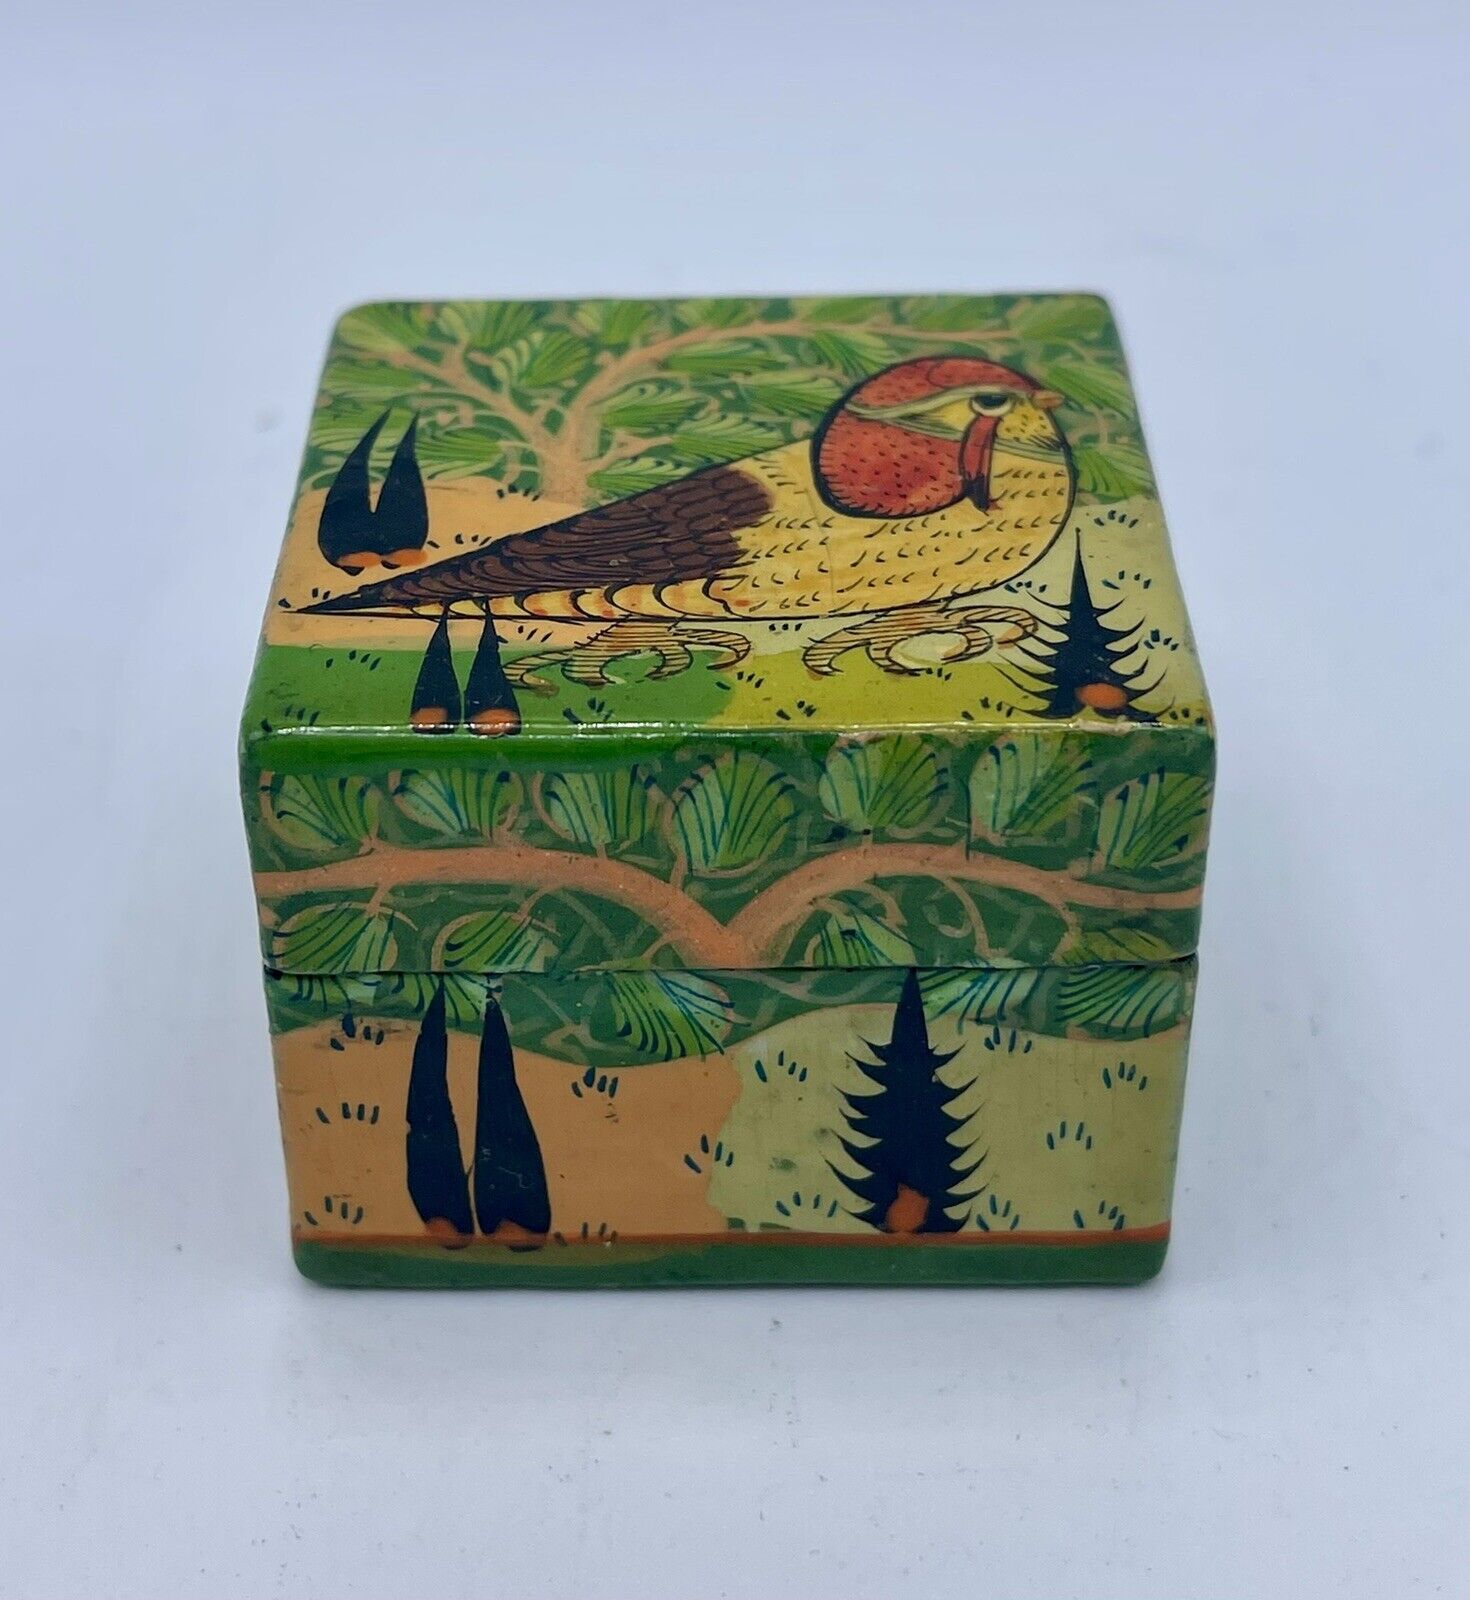 VTG Handmade Kashmir India Lacquered Wood Trinket Box - QUAIL Design